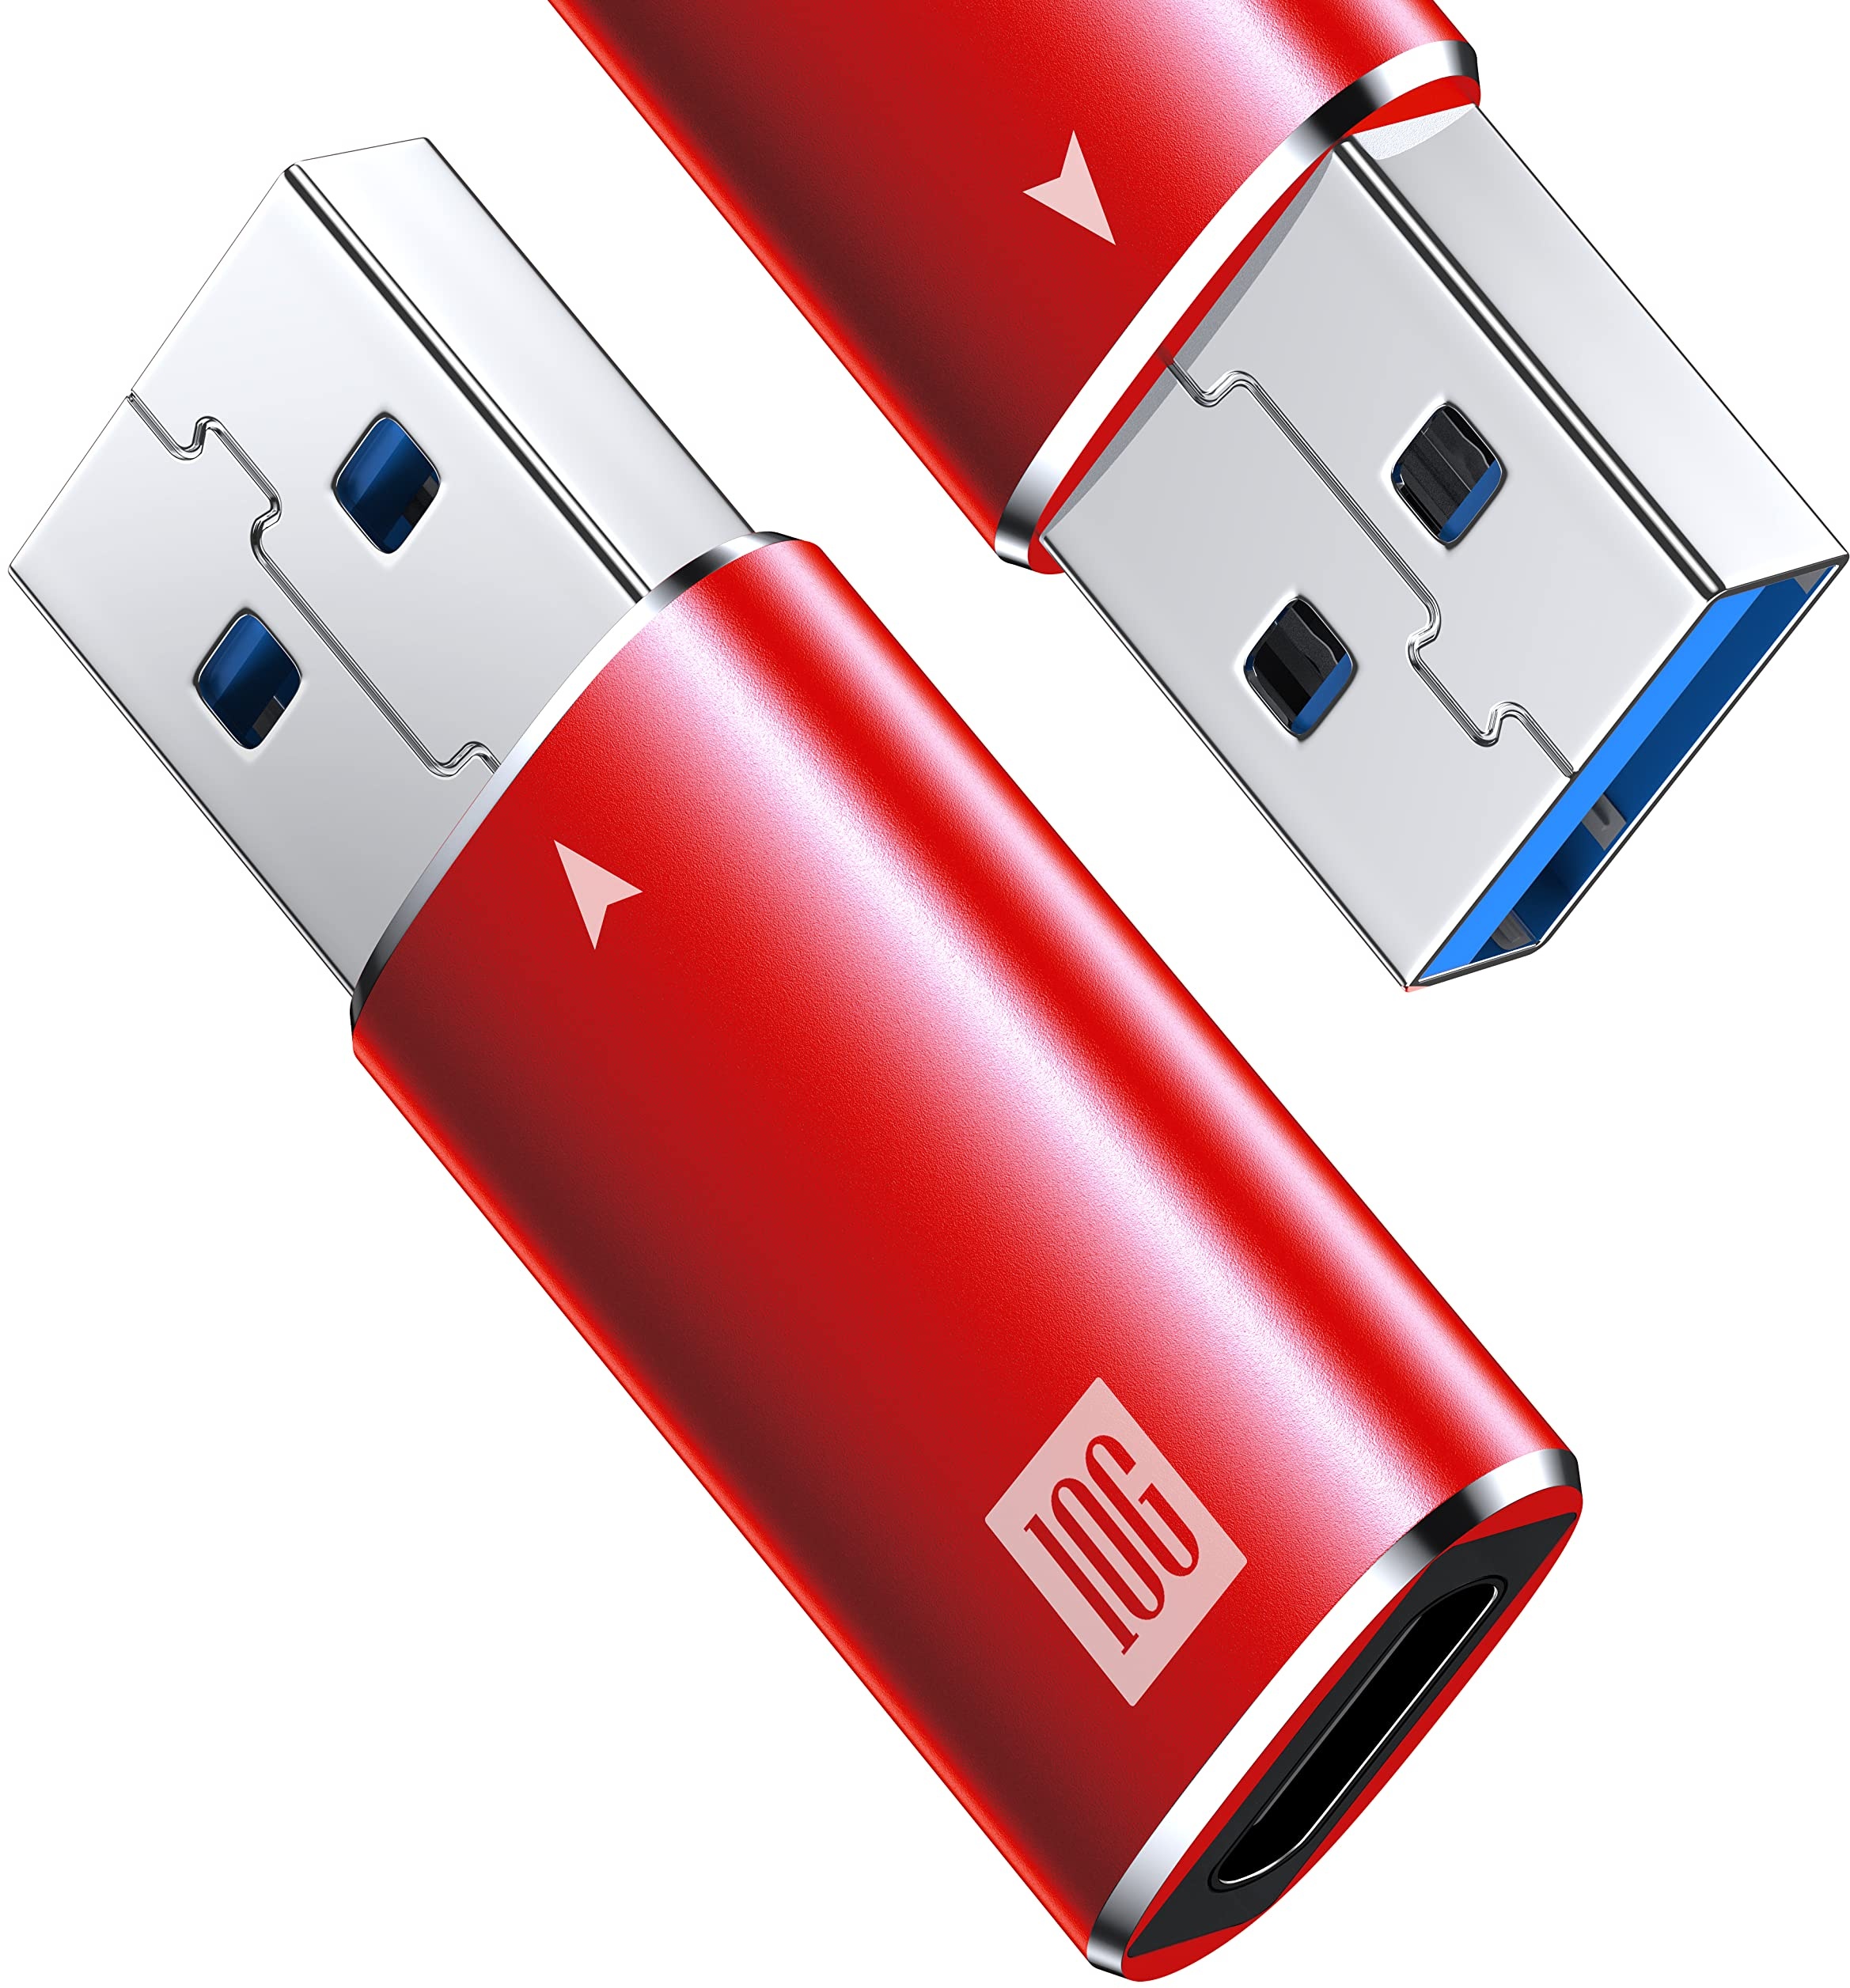 ANDTOBO [10Gbps USB C Buchse zu USB Stecker Adapter 2 Pack, USB 3.1 A zu USB C Adapter SuperSpeed Data Sync. Kompatibel mit iPhone 12 Mini/12 Pro Max, Typ-C Kopfhörer, Power Bank, Quest Link- Rot